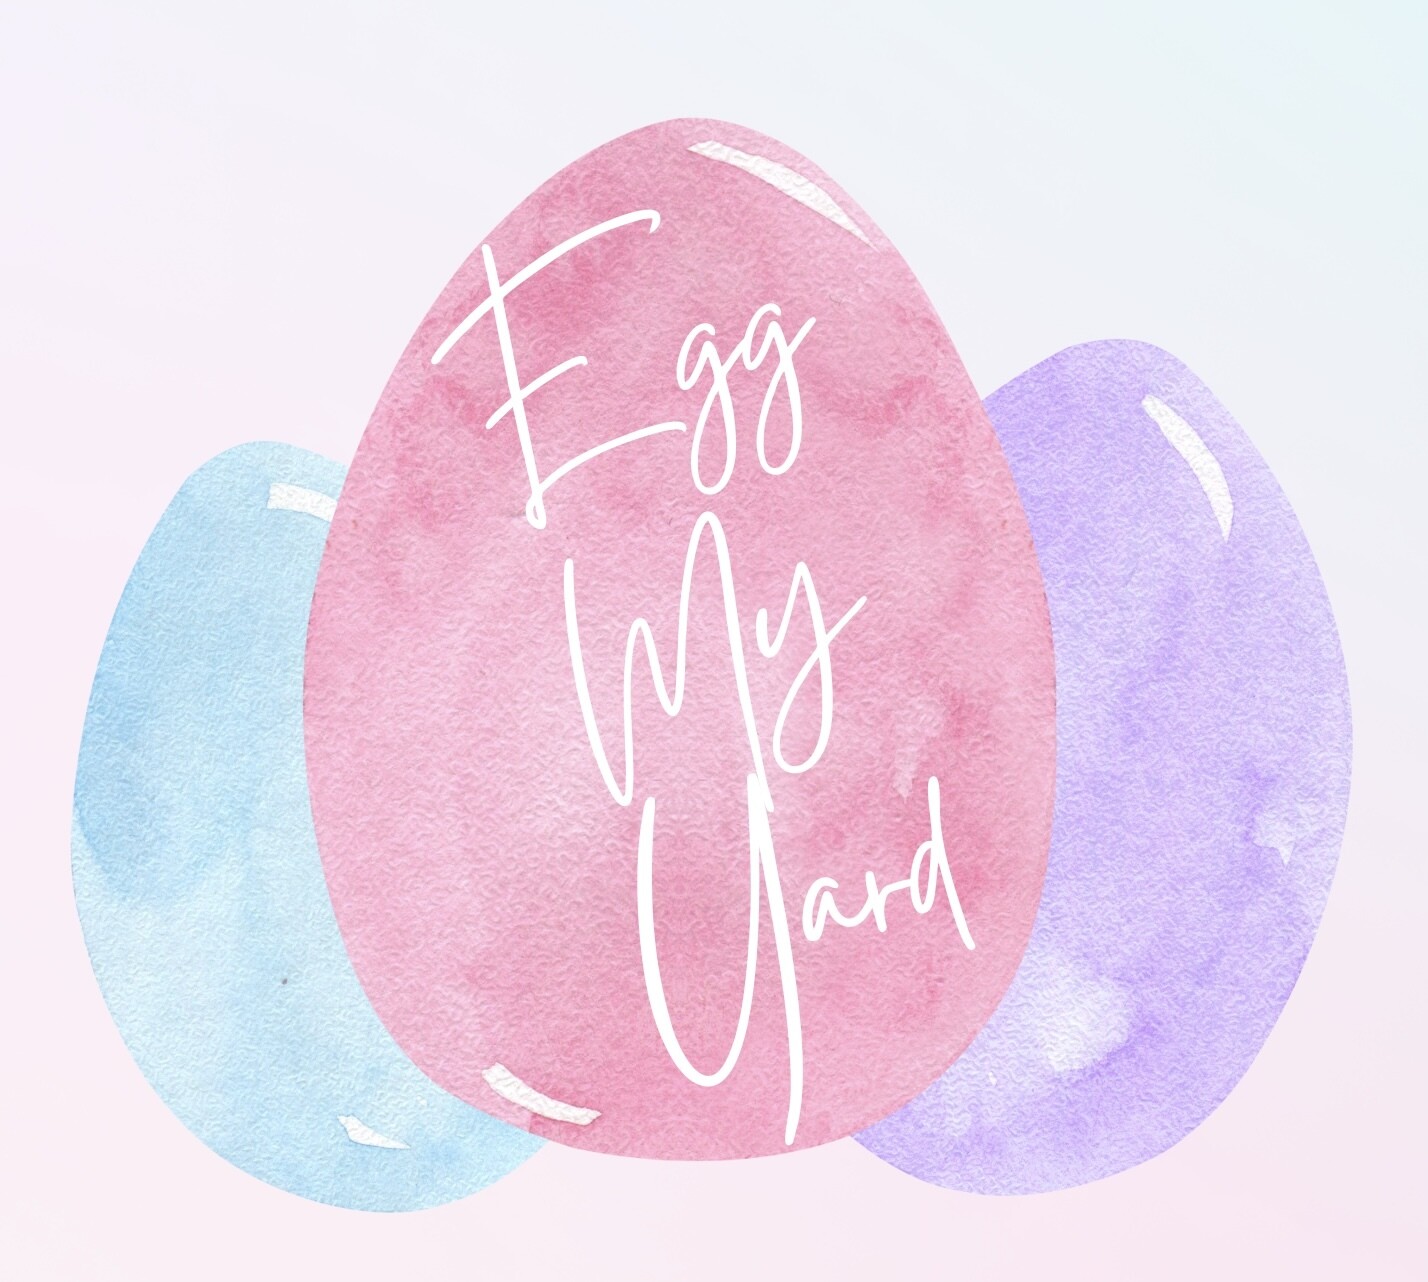 "Egg" My Yard